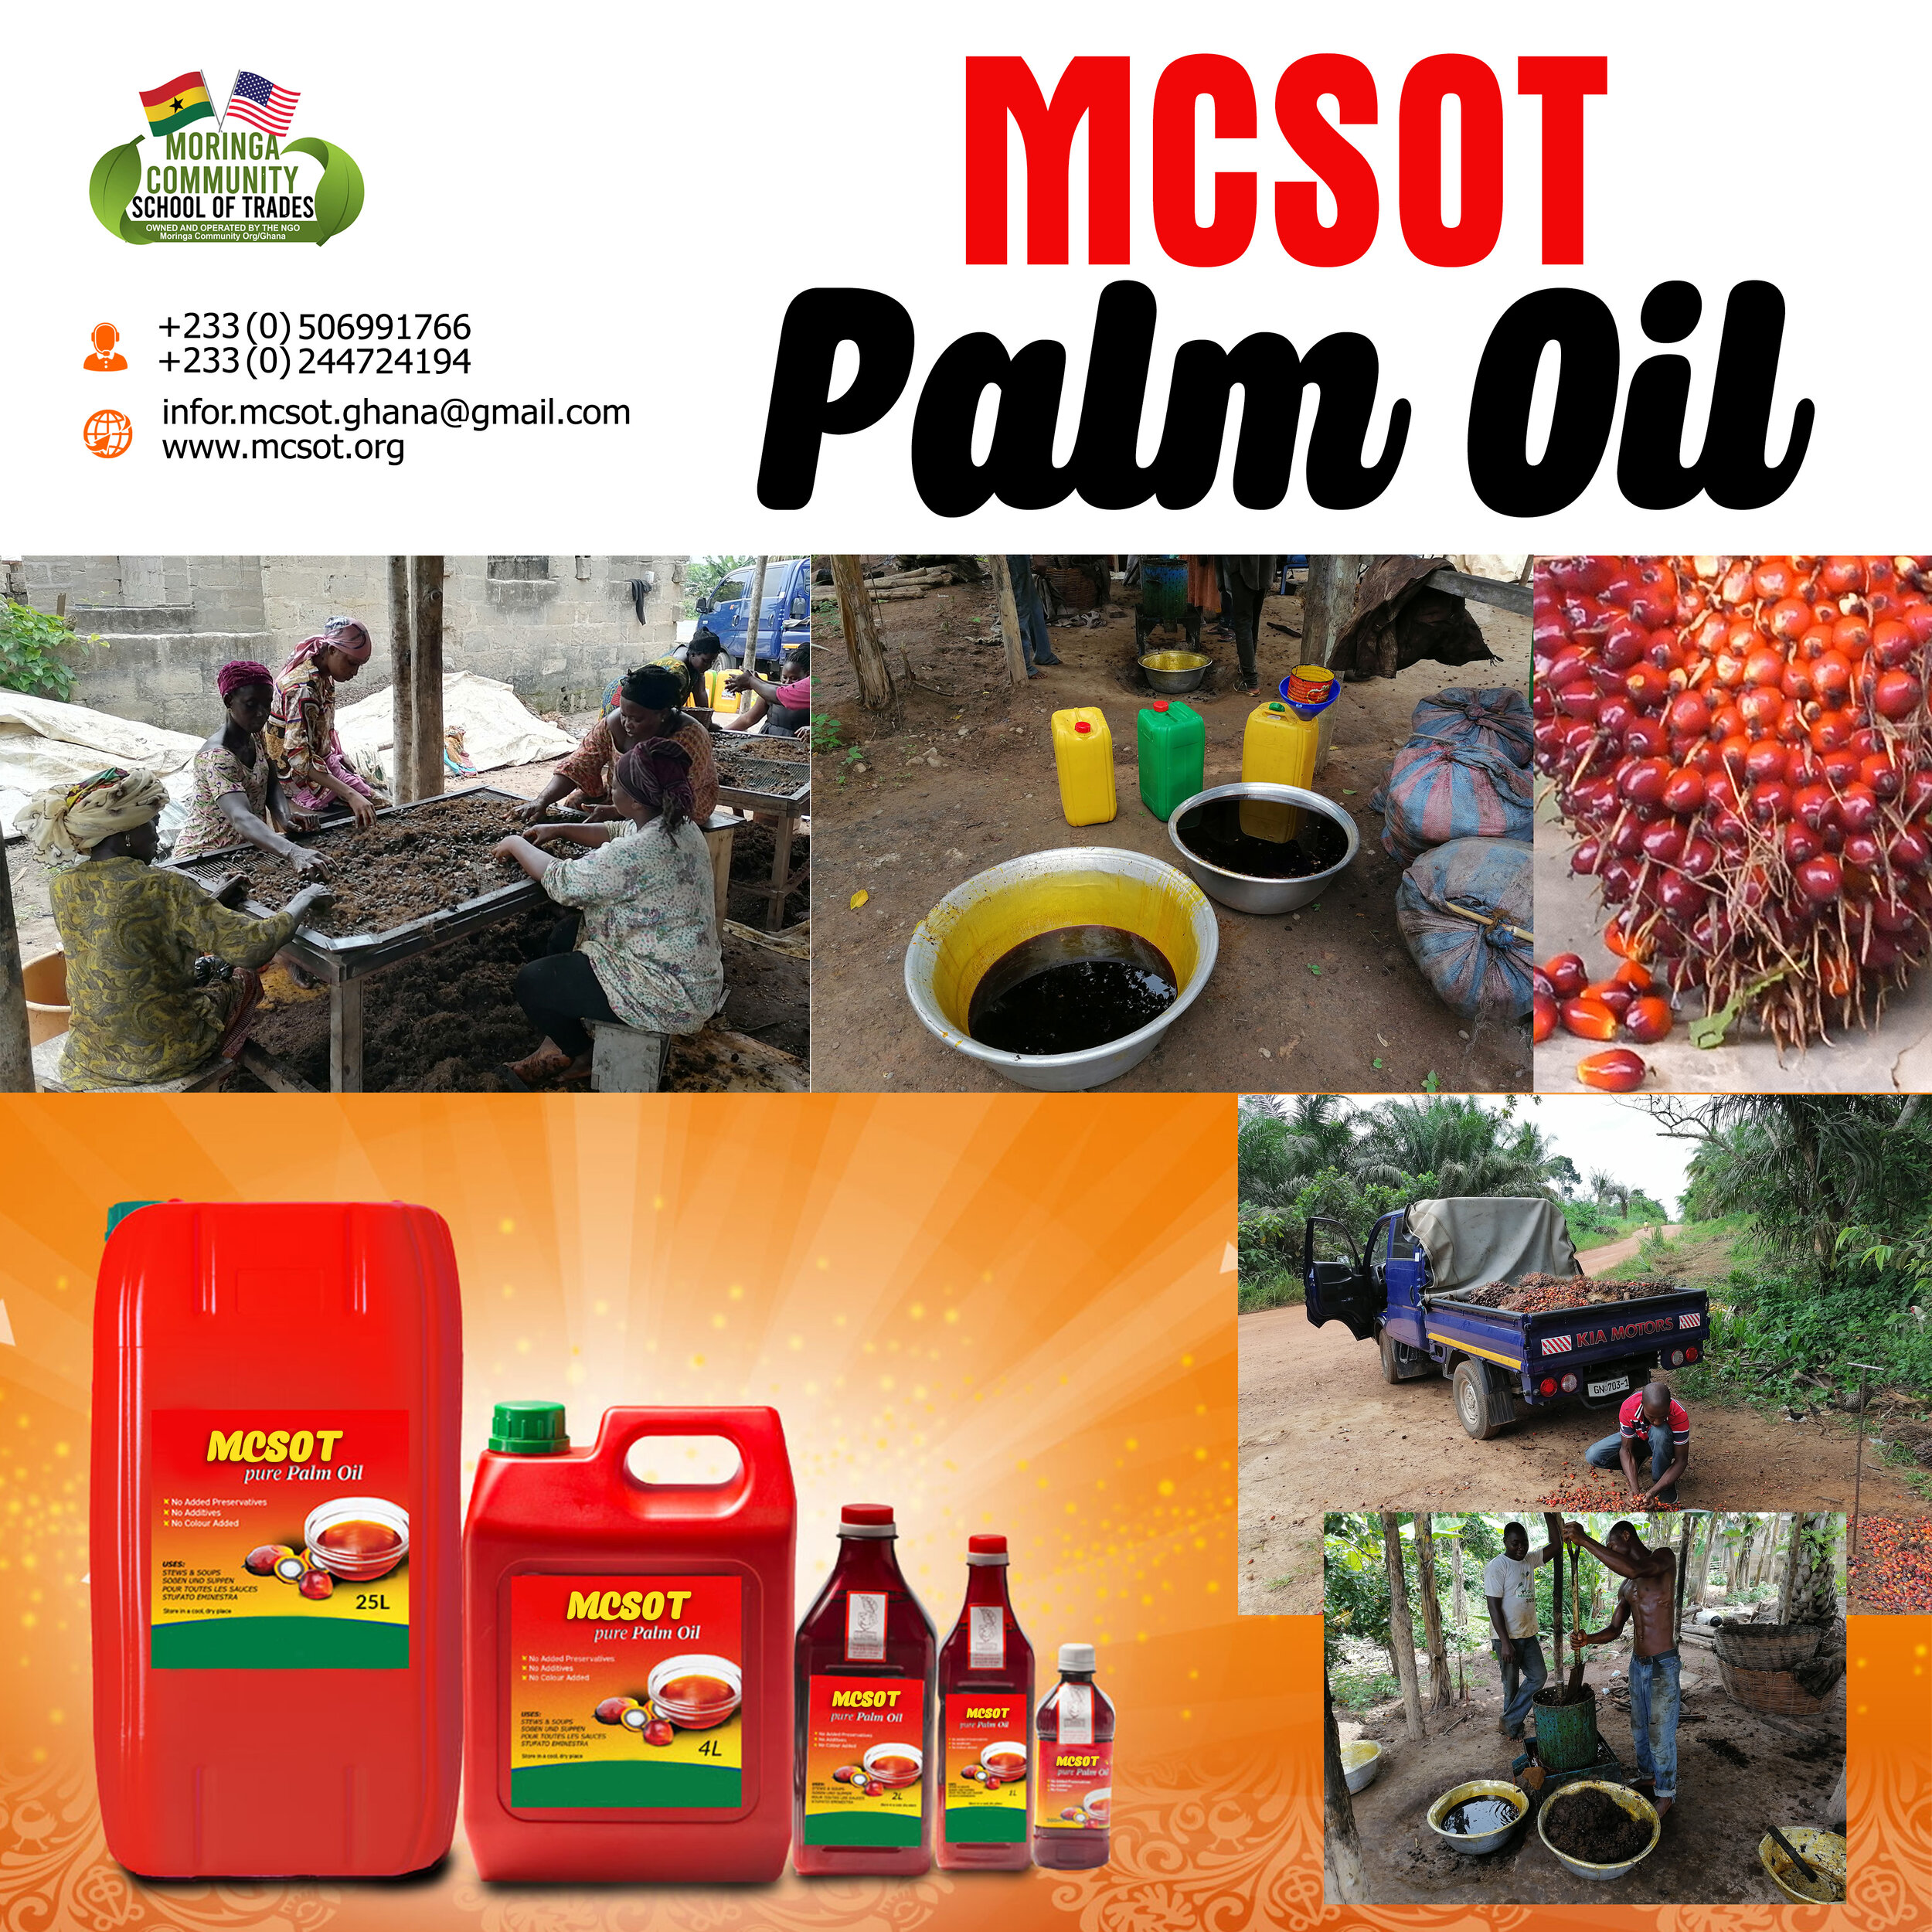 MCSOT Palm Oil.jpg